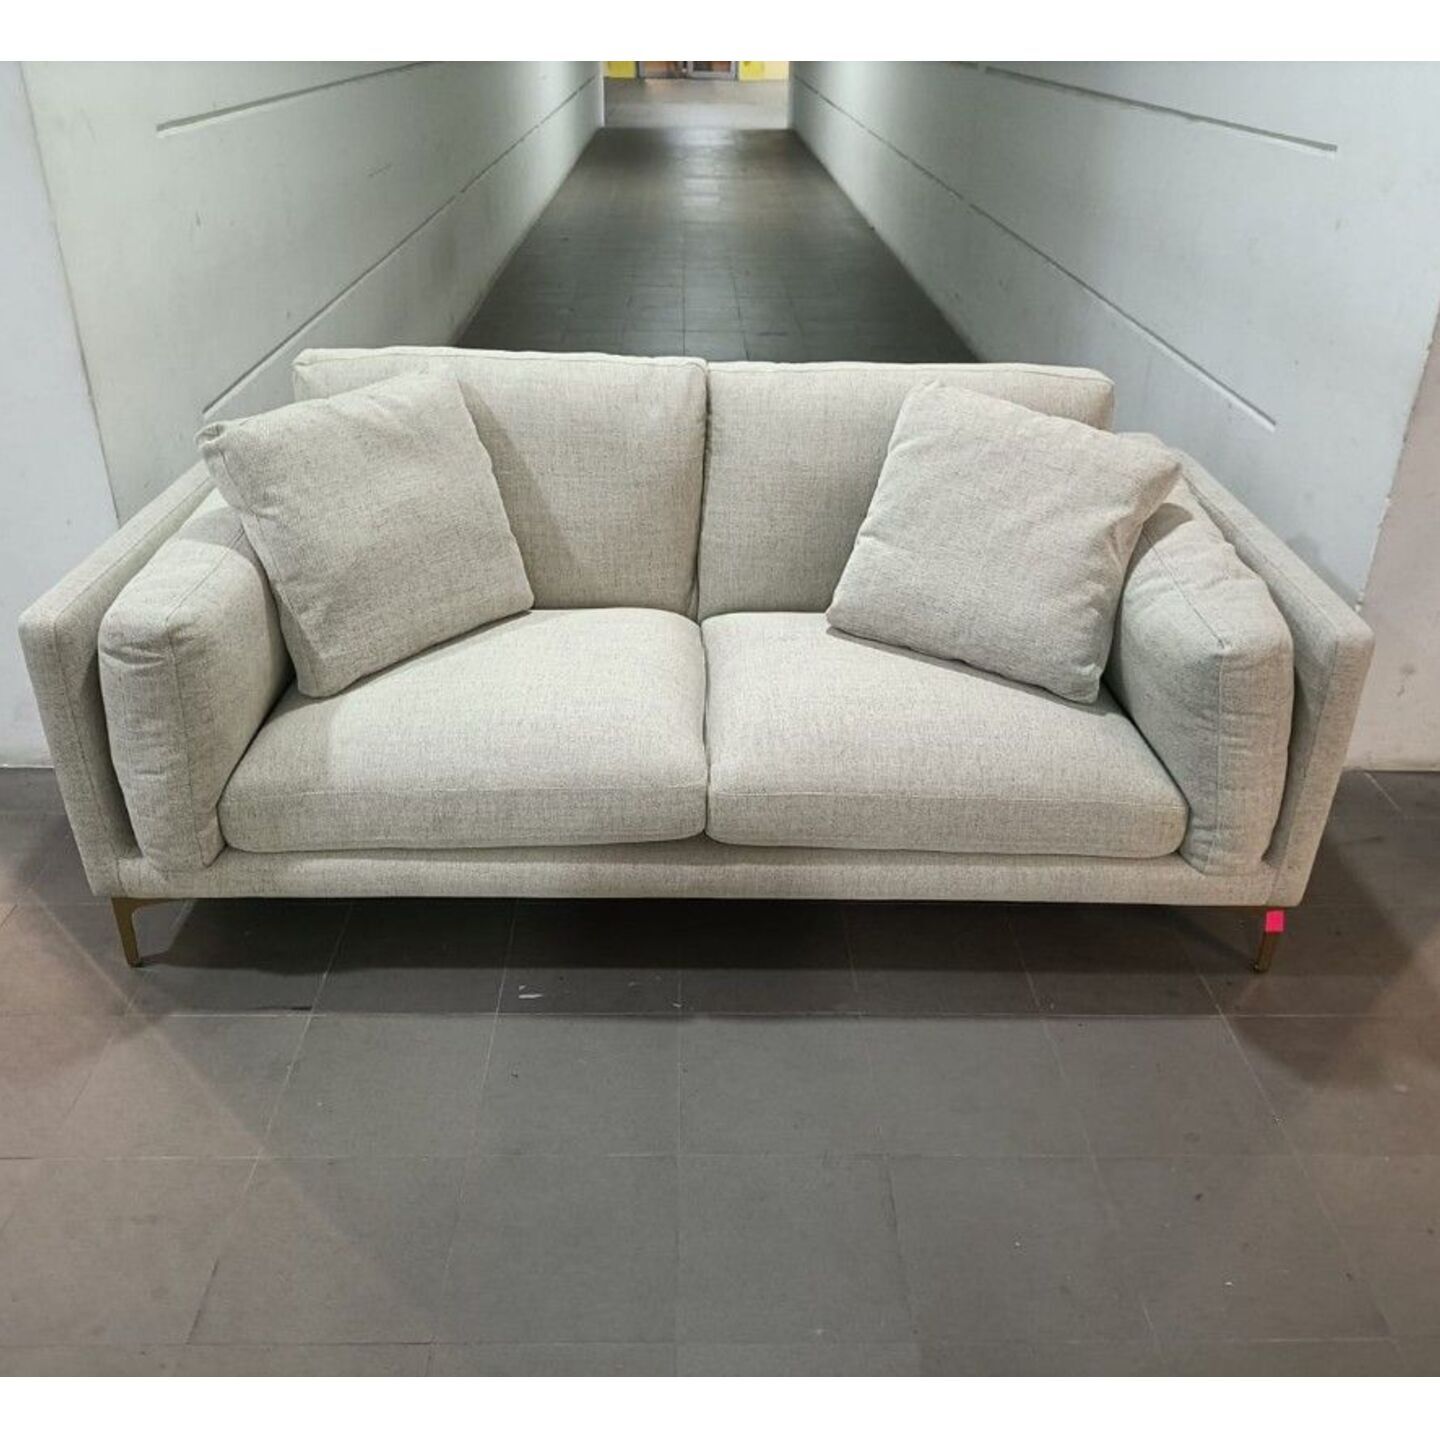 HART 3 Seater Sofa in PEARL BEIGE FABRIC